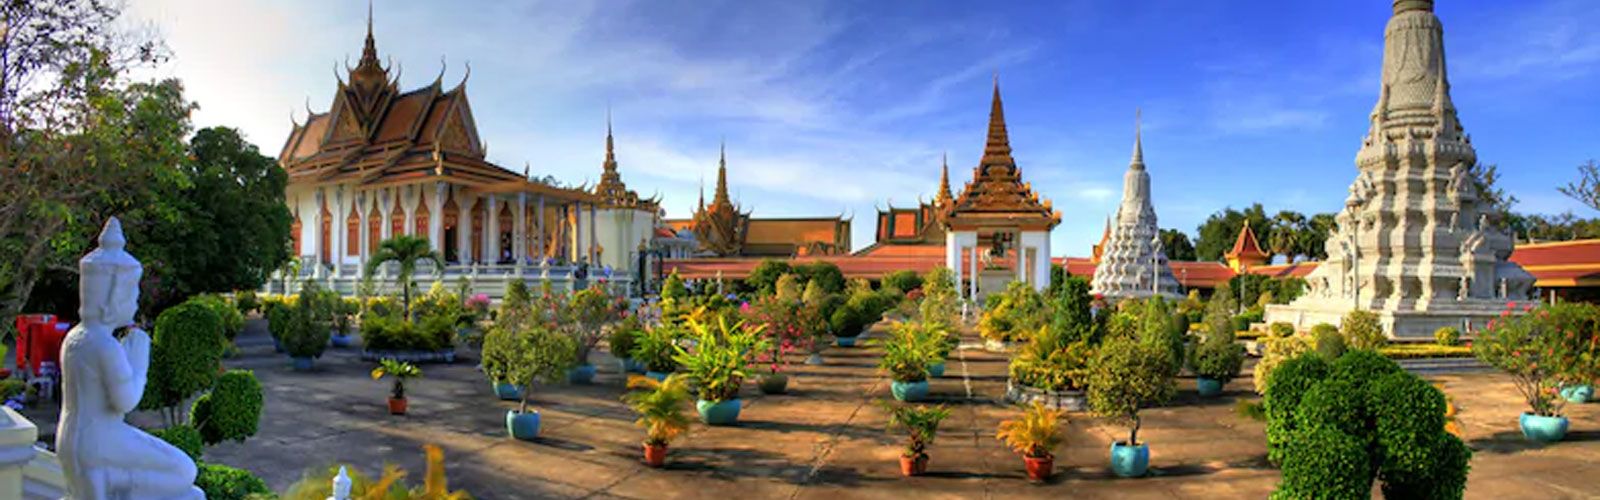 Phnom Penh Holidays | Asianventure Tours